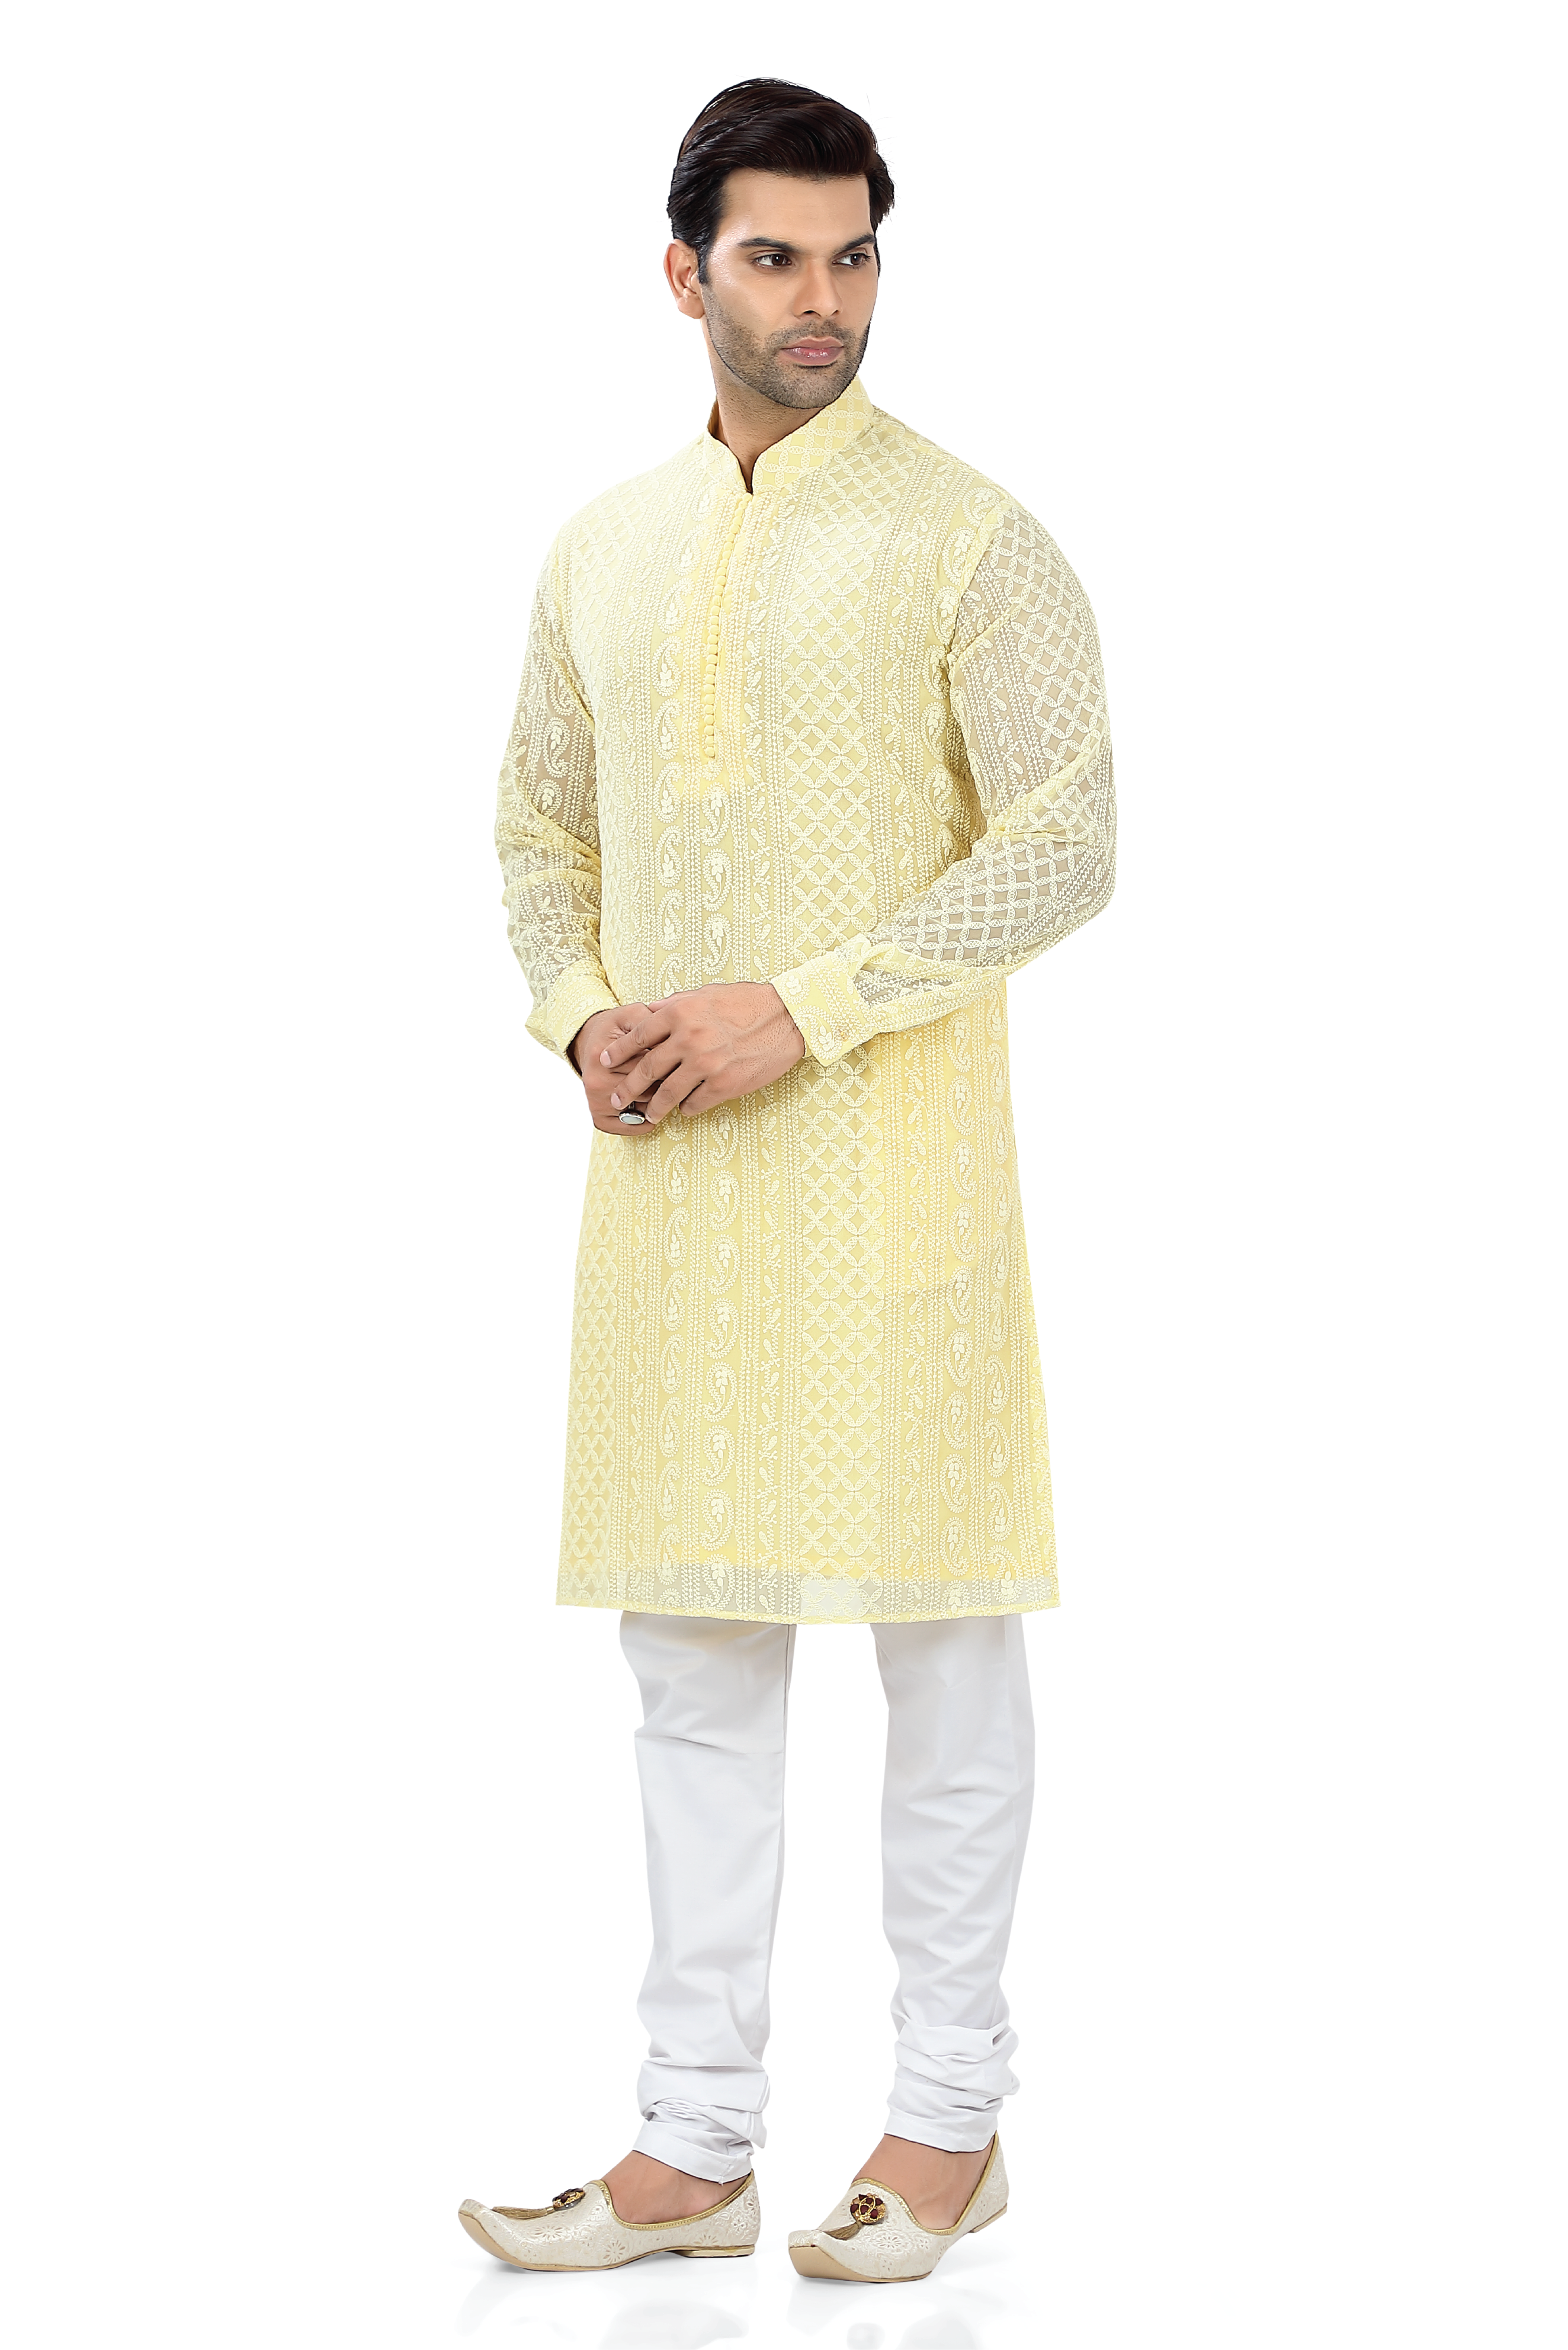 Lucknowi Chikankari Kurta Pajama Set in Yellow Color